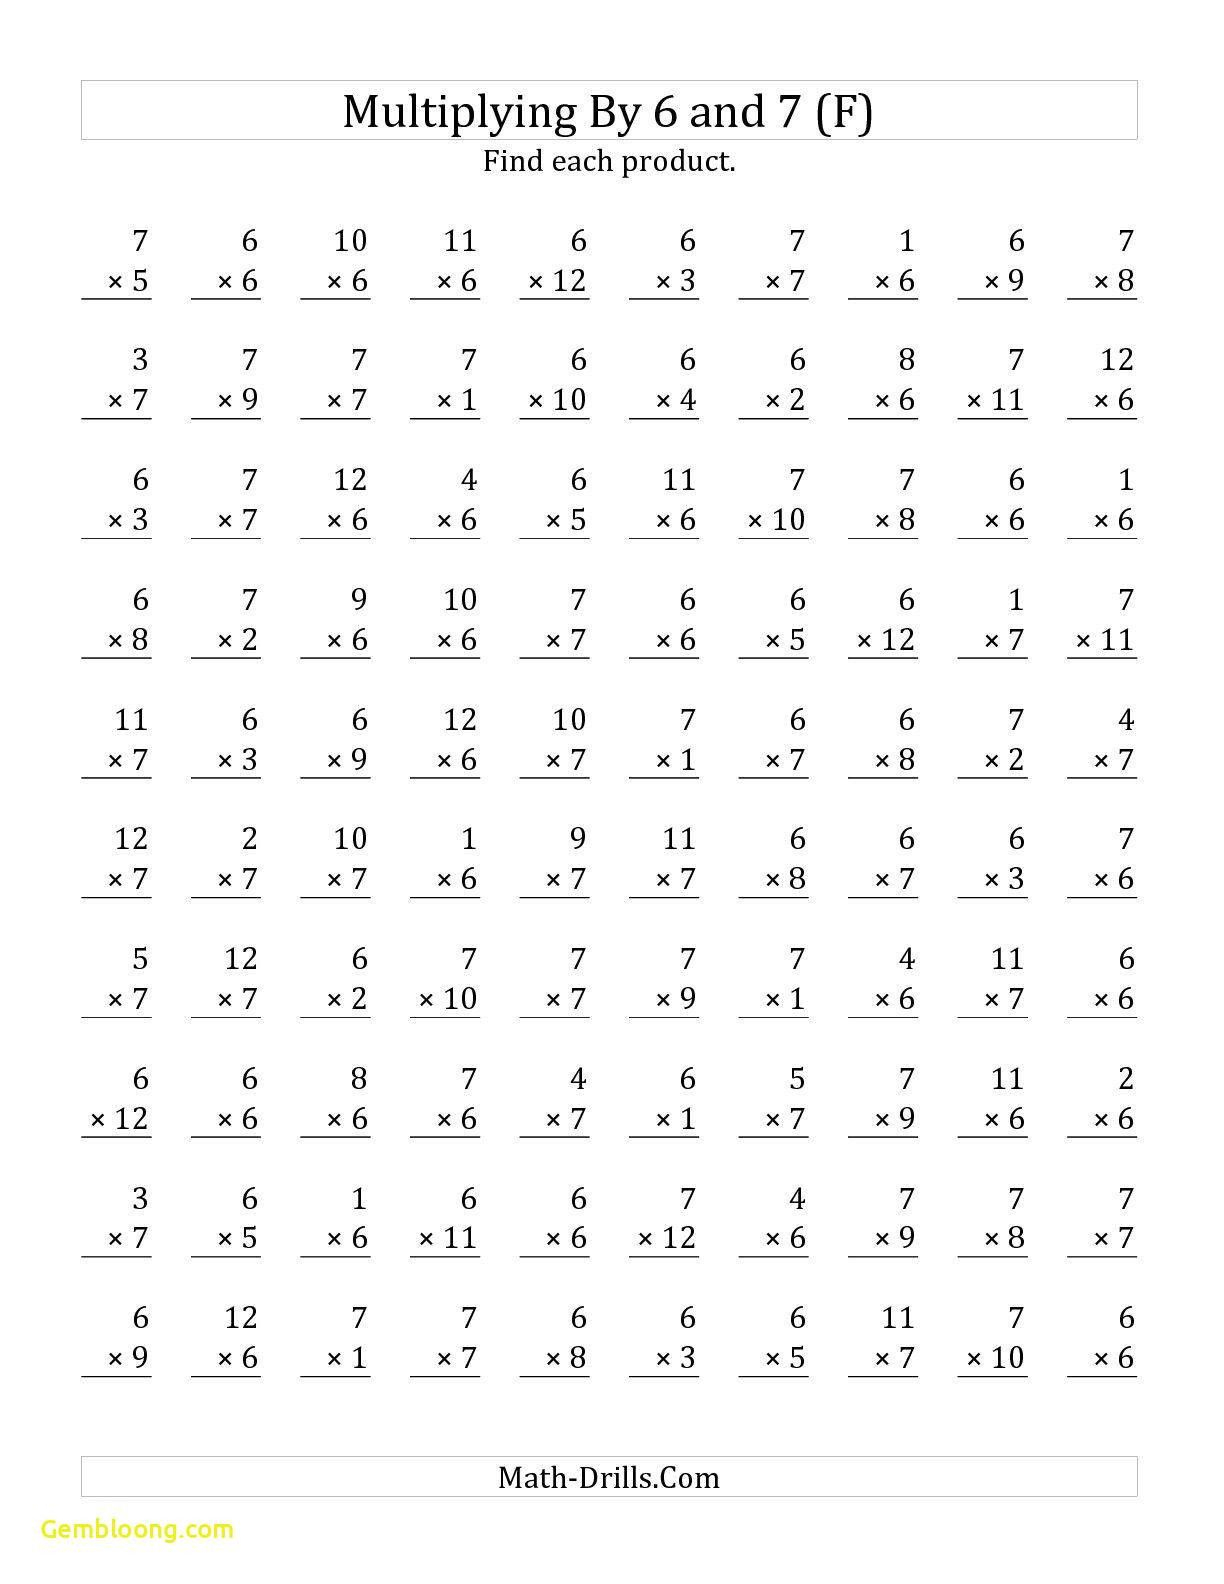  Multiplication Chart Super Teacher PrintableMultiplication